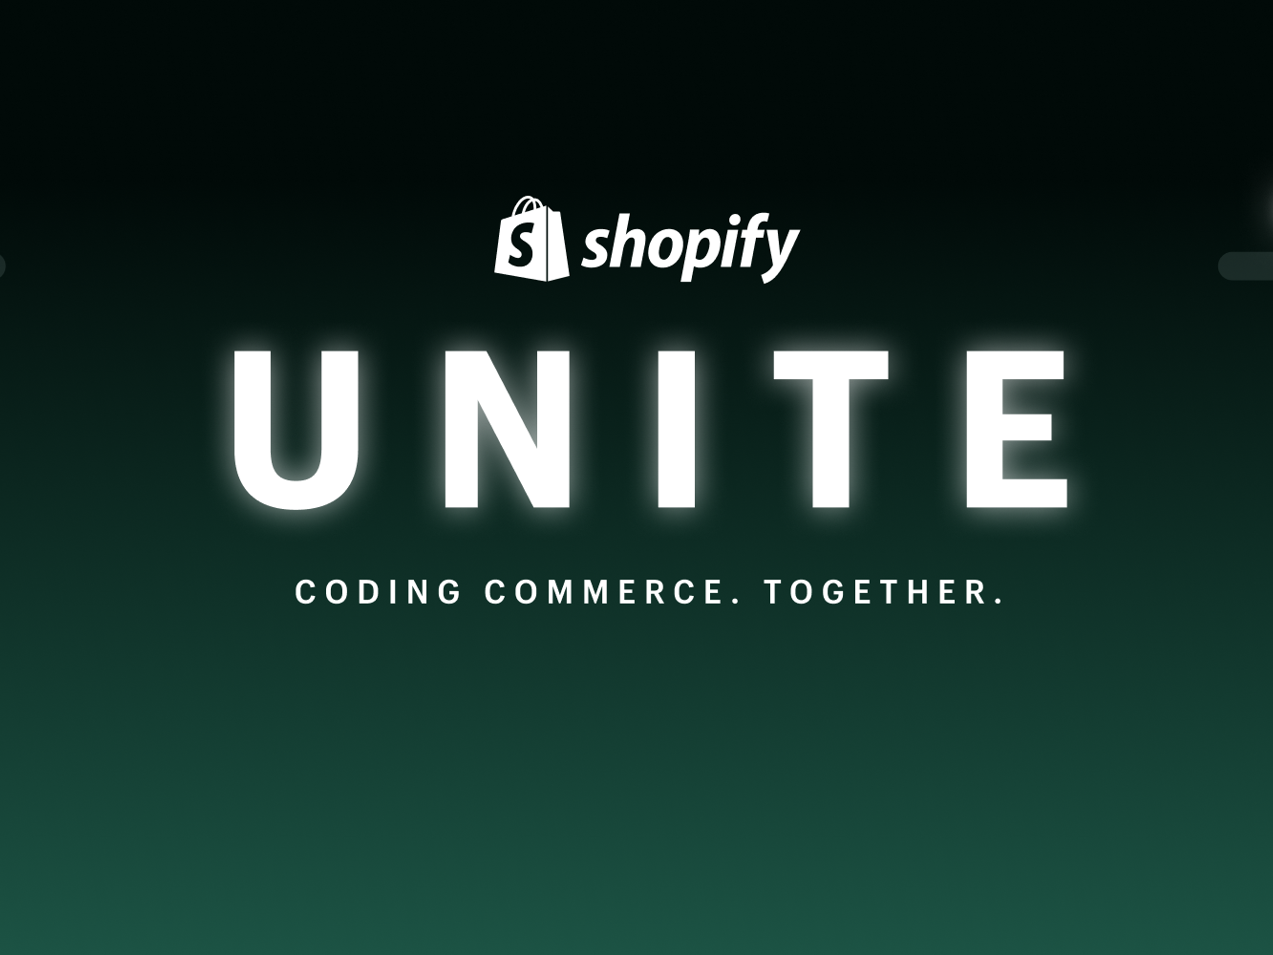 Shopify Unite 2021